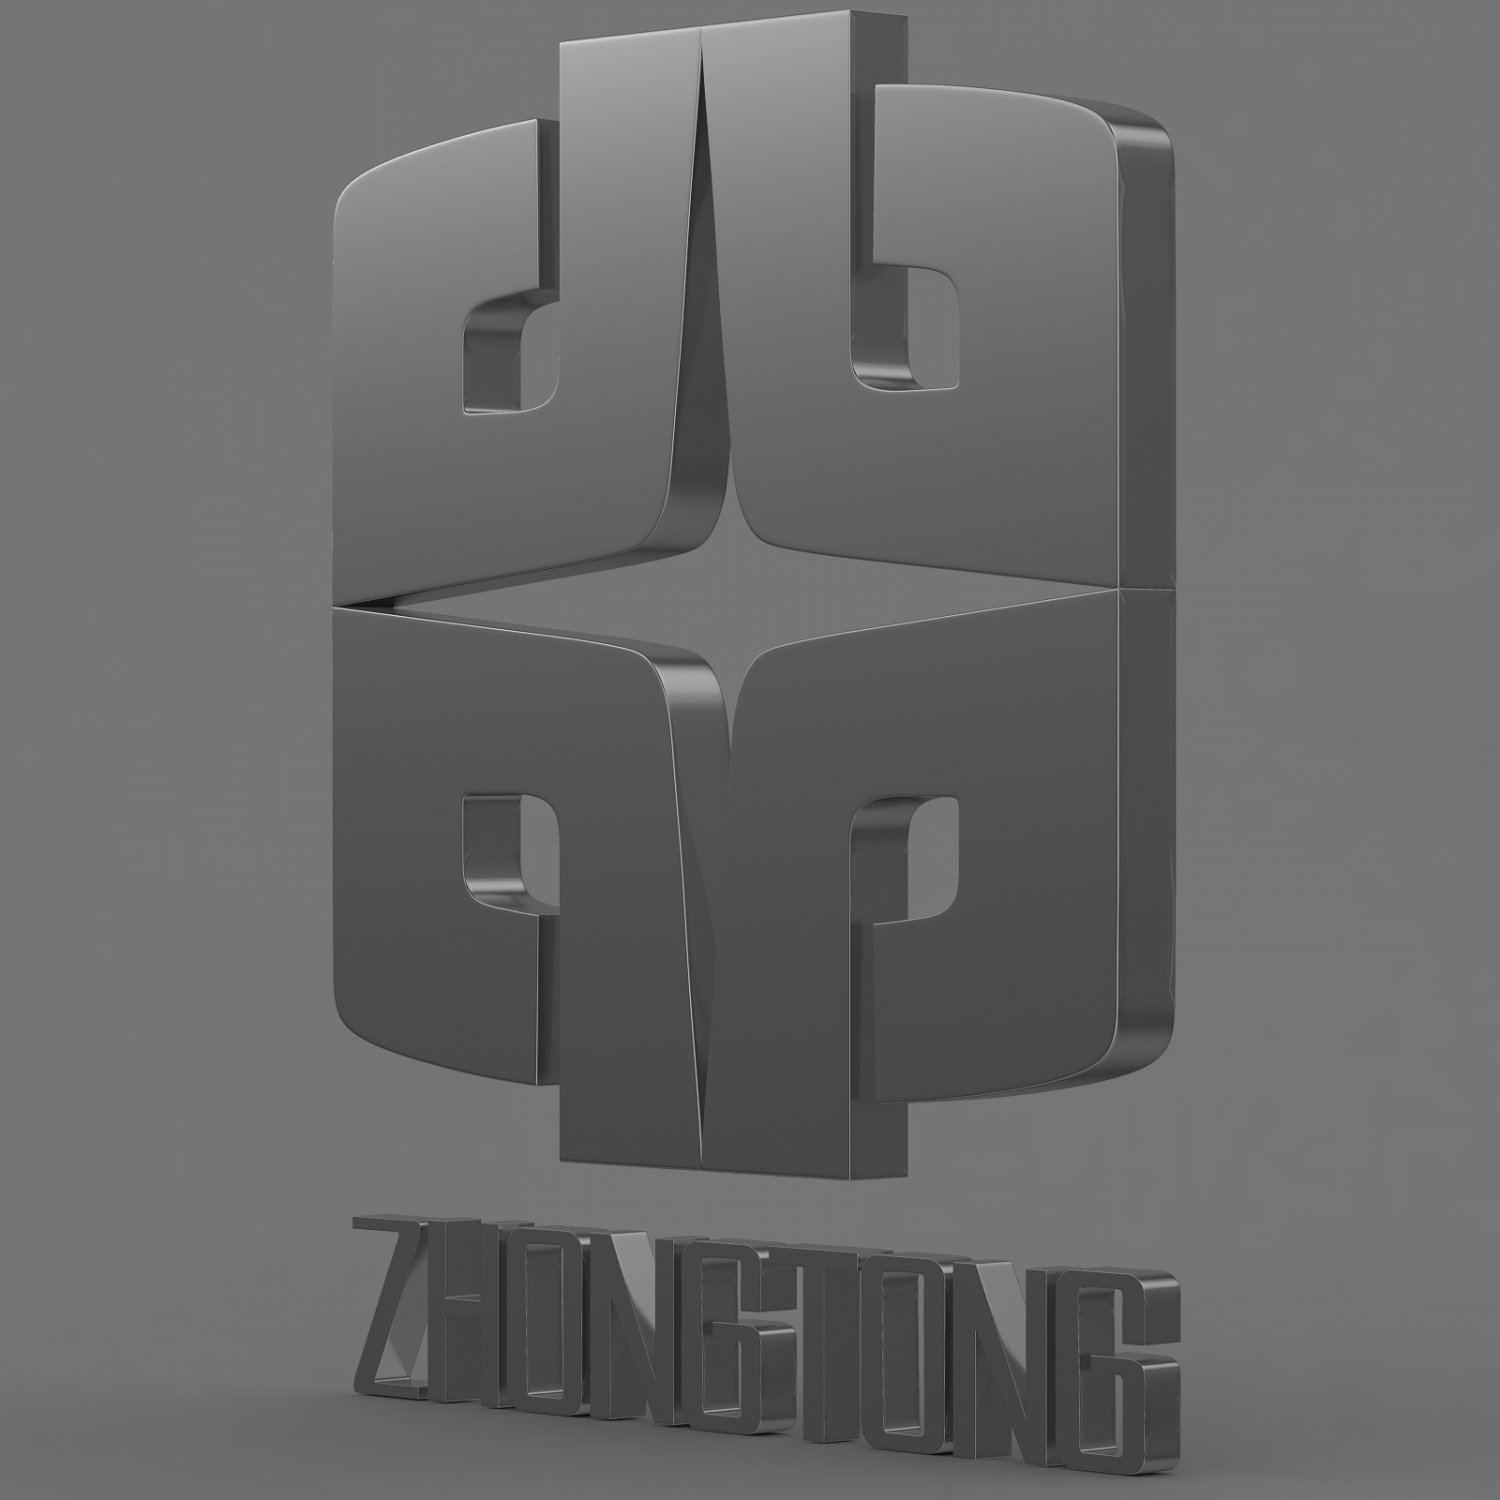 3д модели логотипов. 3ds models logotype. Zhongtong логотип PNG.